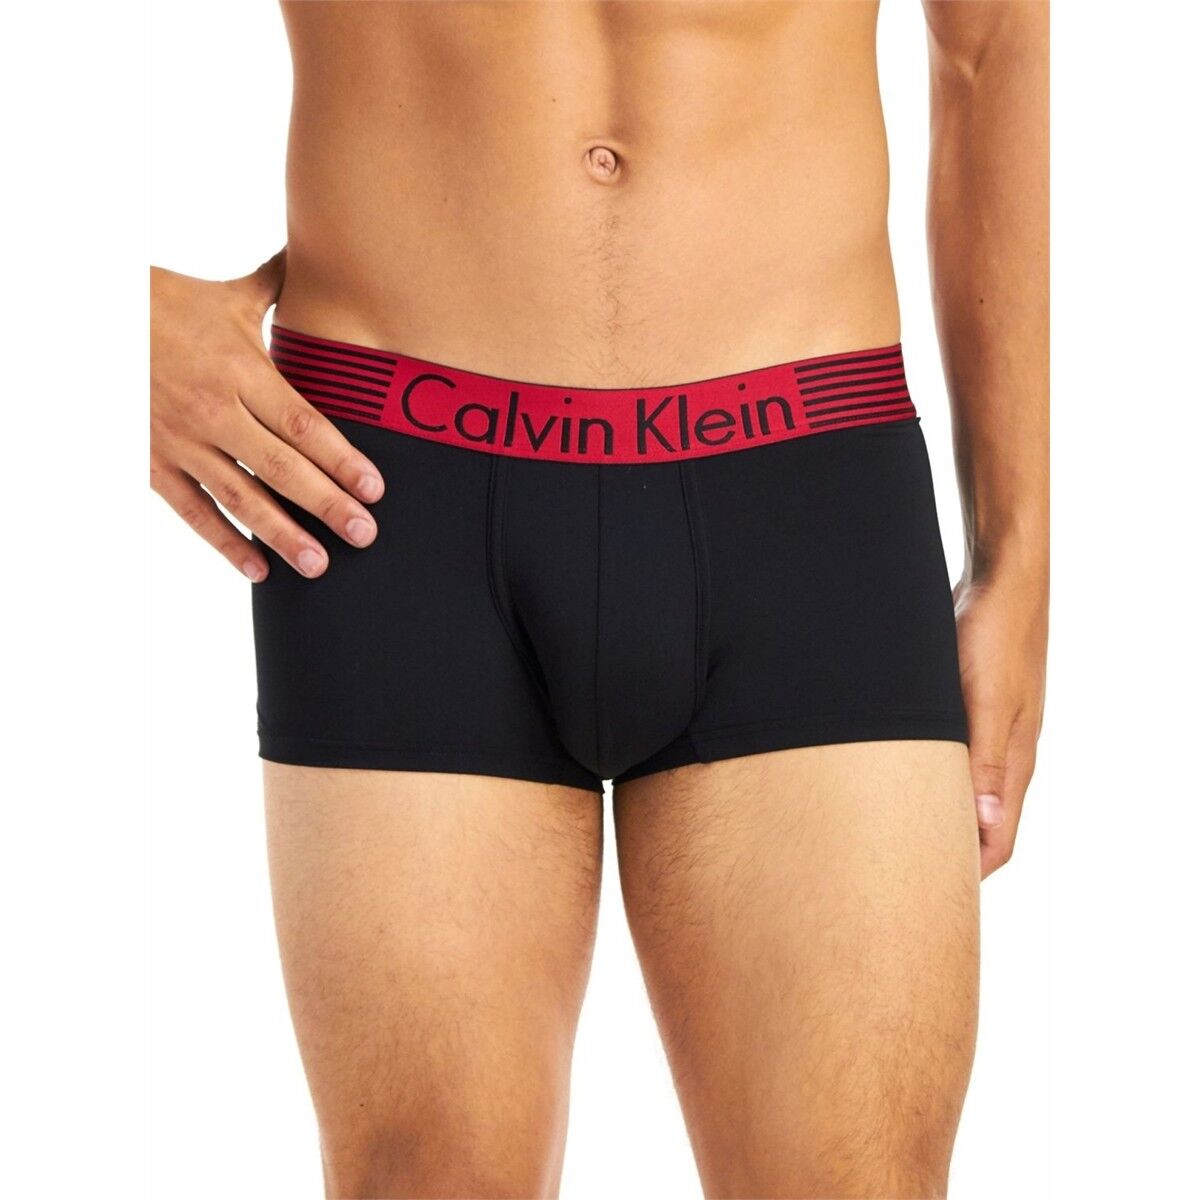 Calvin Klein Men LIMITED EDITION Low Rise Trunks Iron Strength Microfiber  Boxer